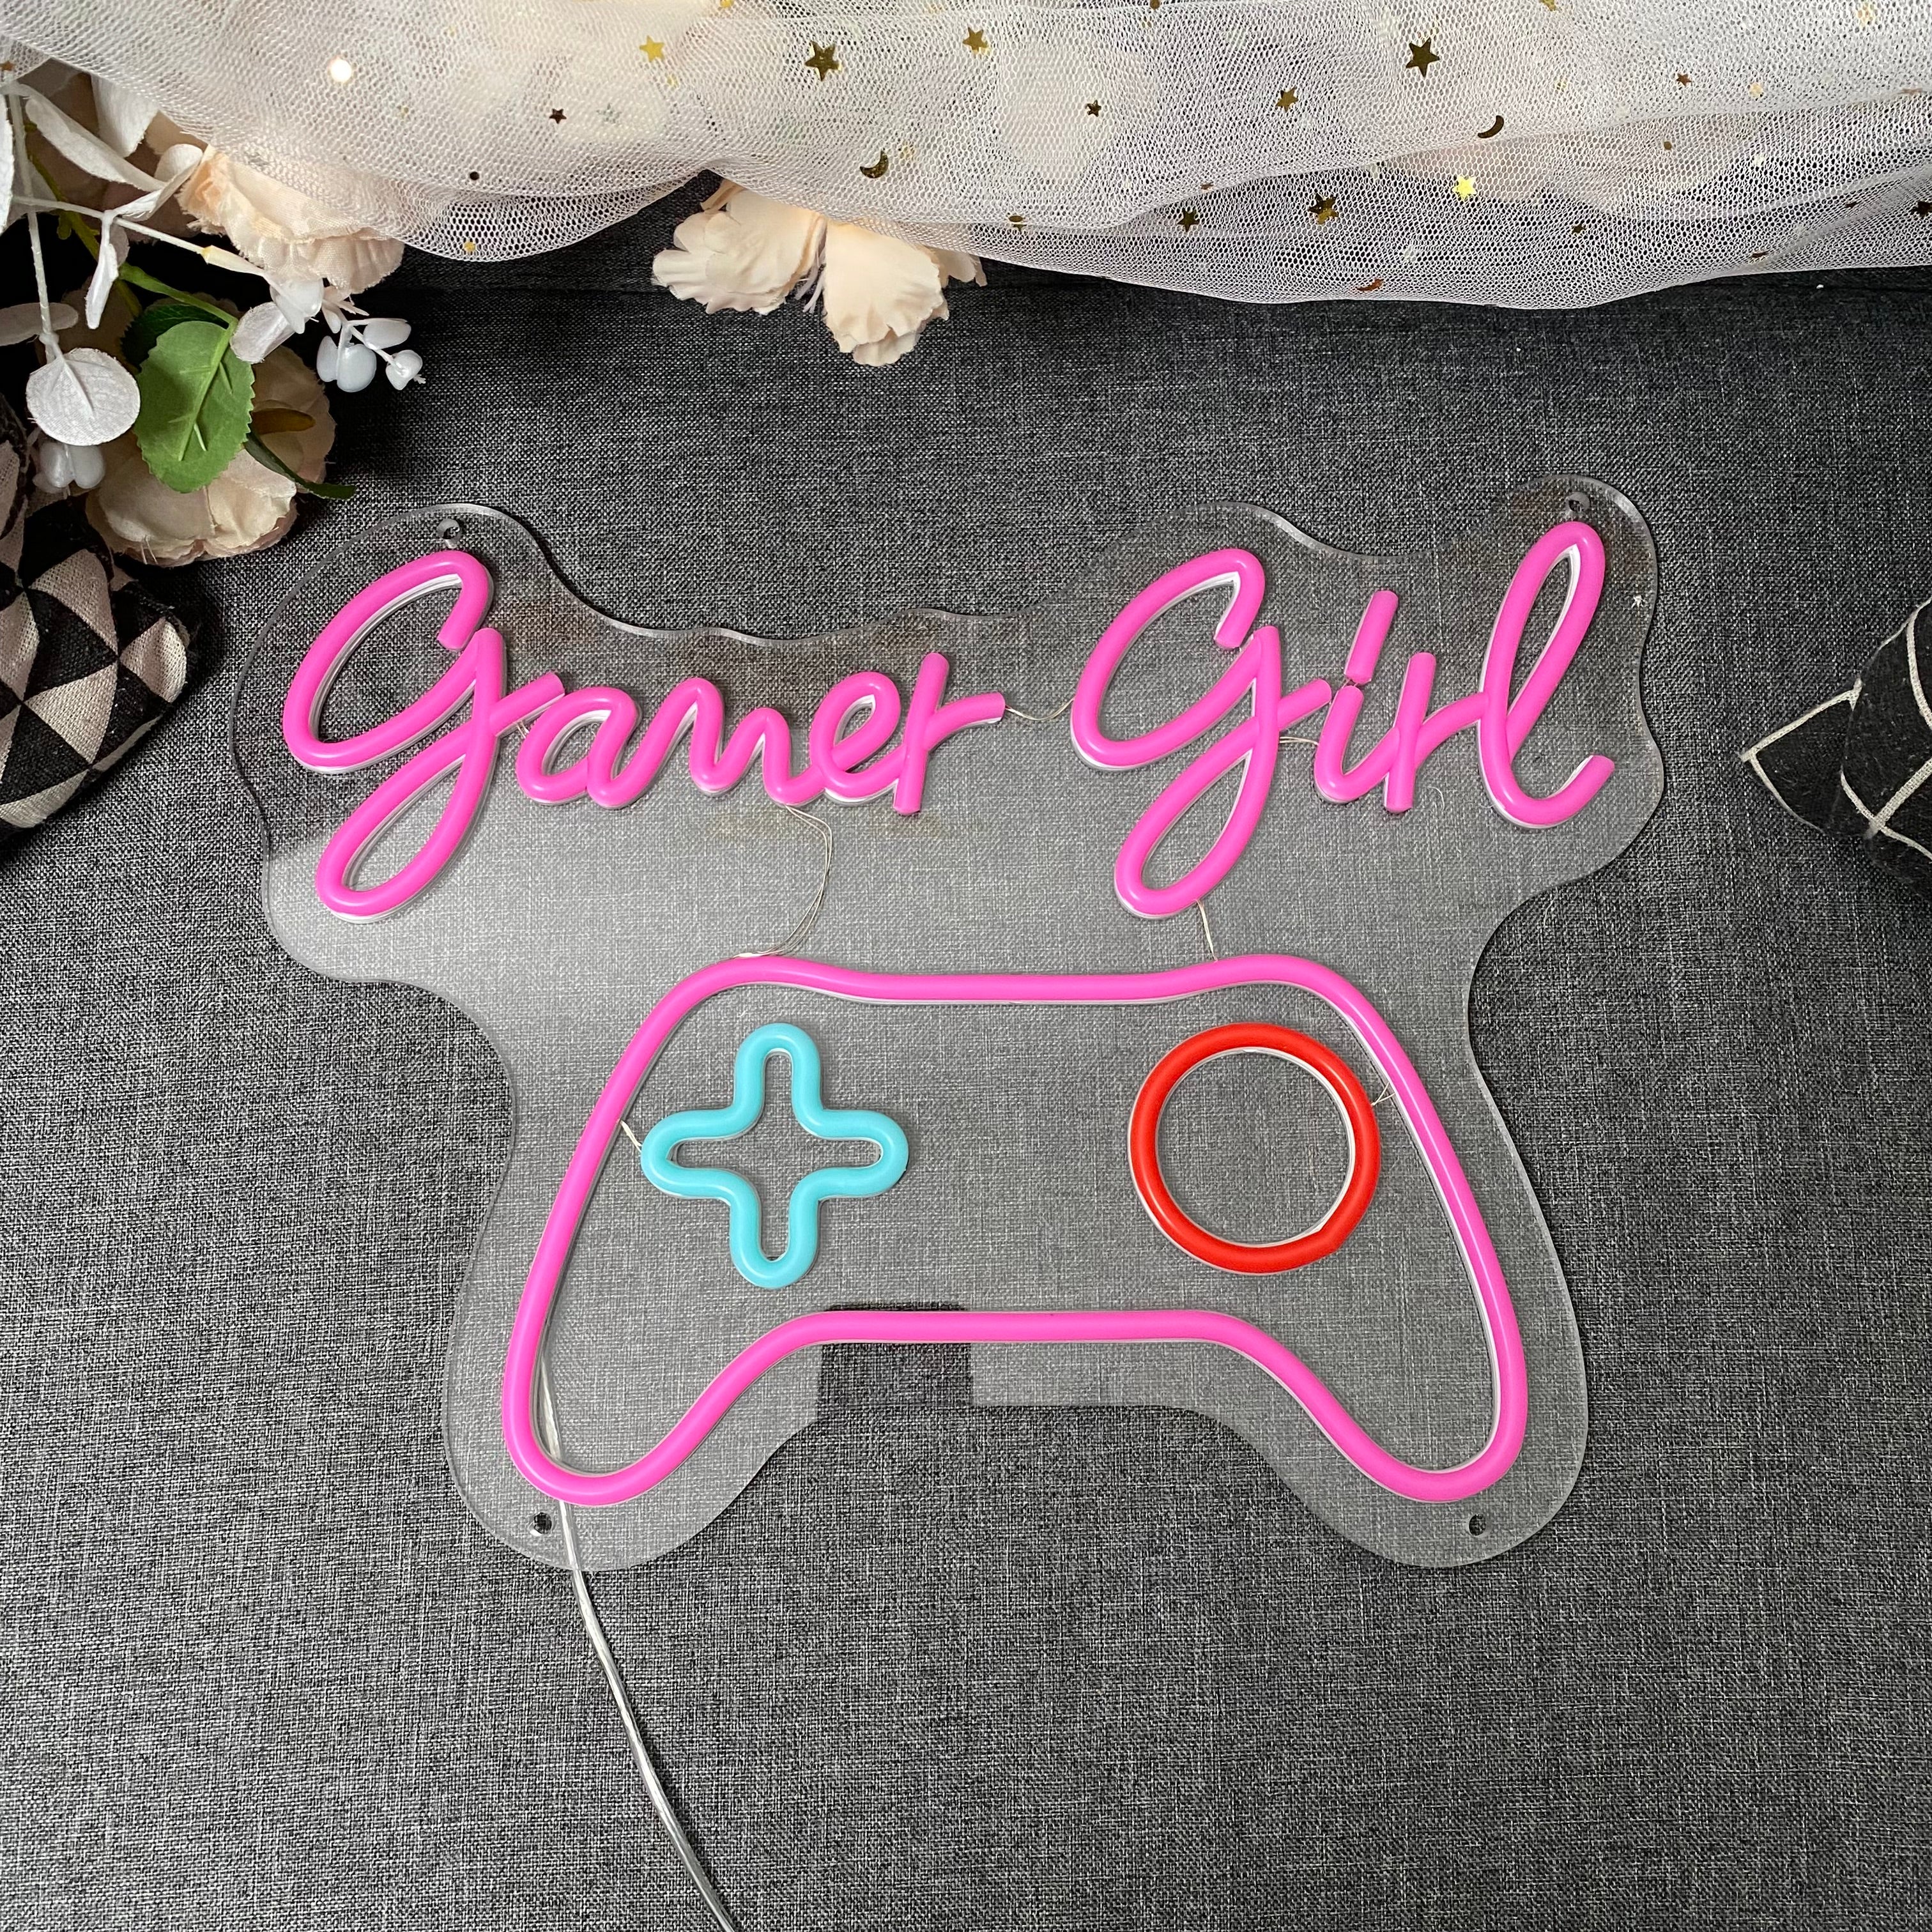 Gamer Girl Gameroom Decoration